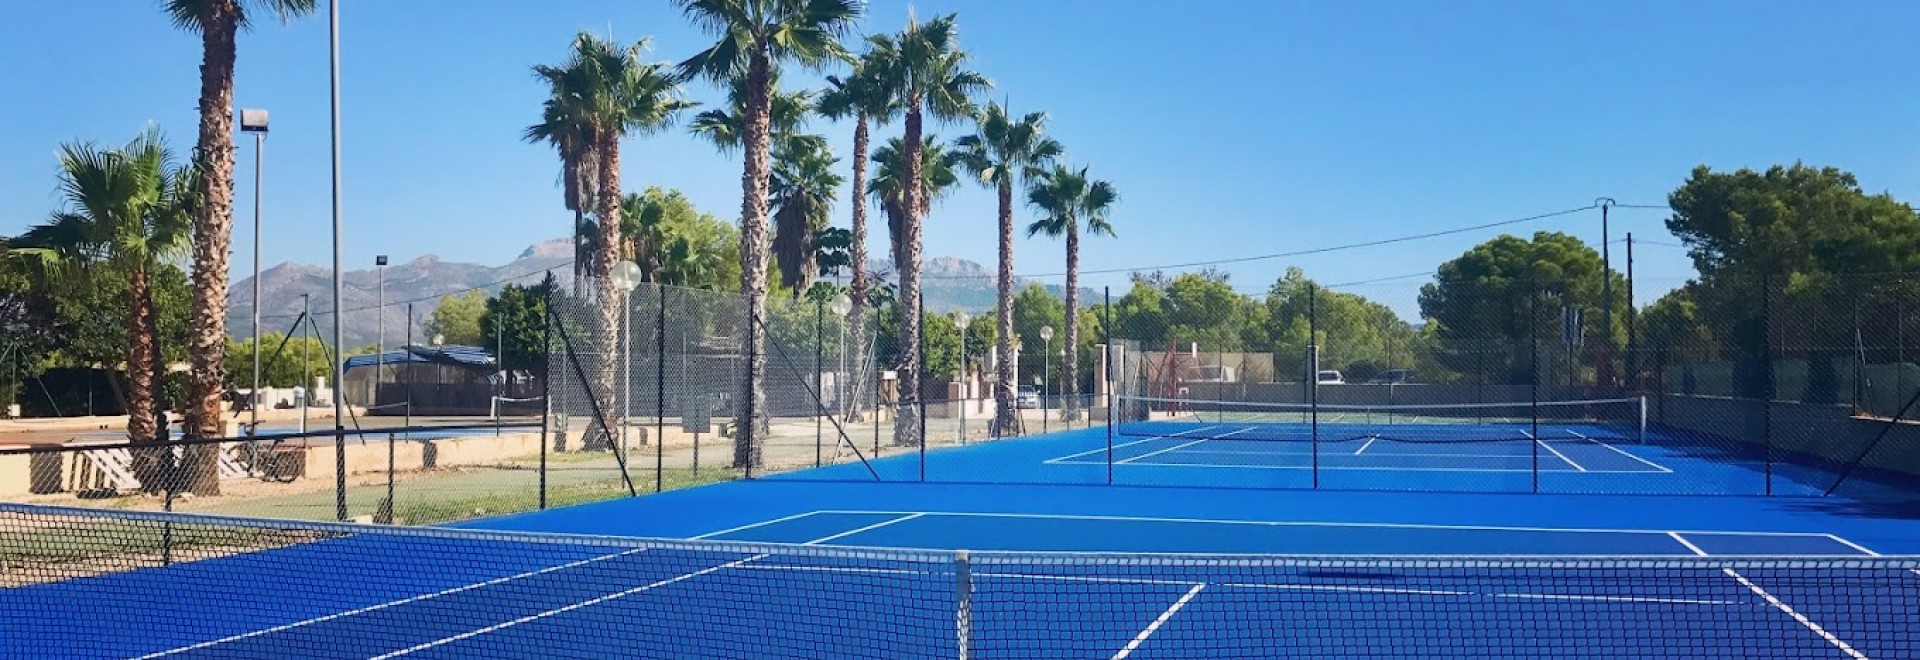 IQL Tennis Academy | Tennis & Padel, Spain - Book. Travel. Play.